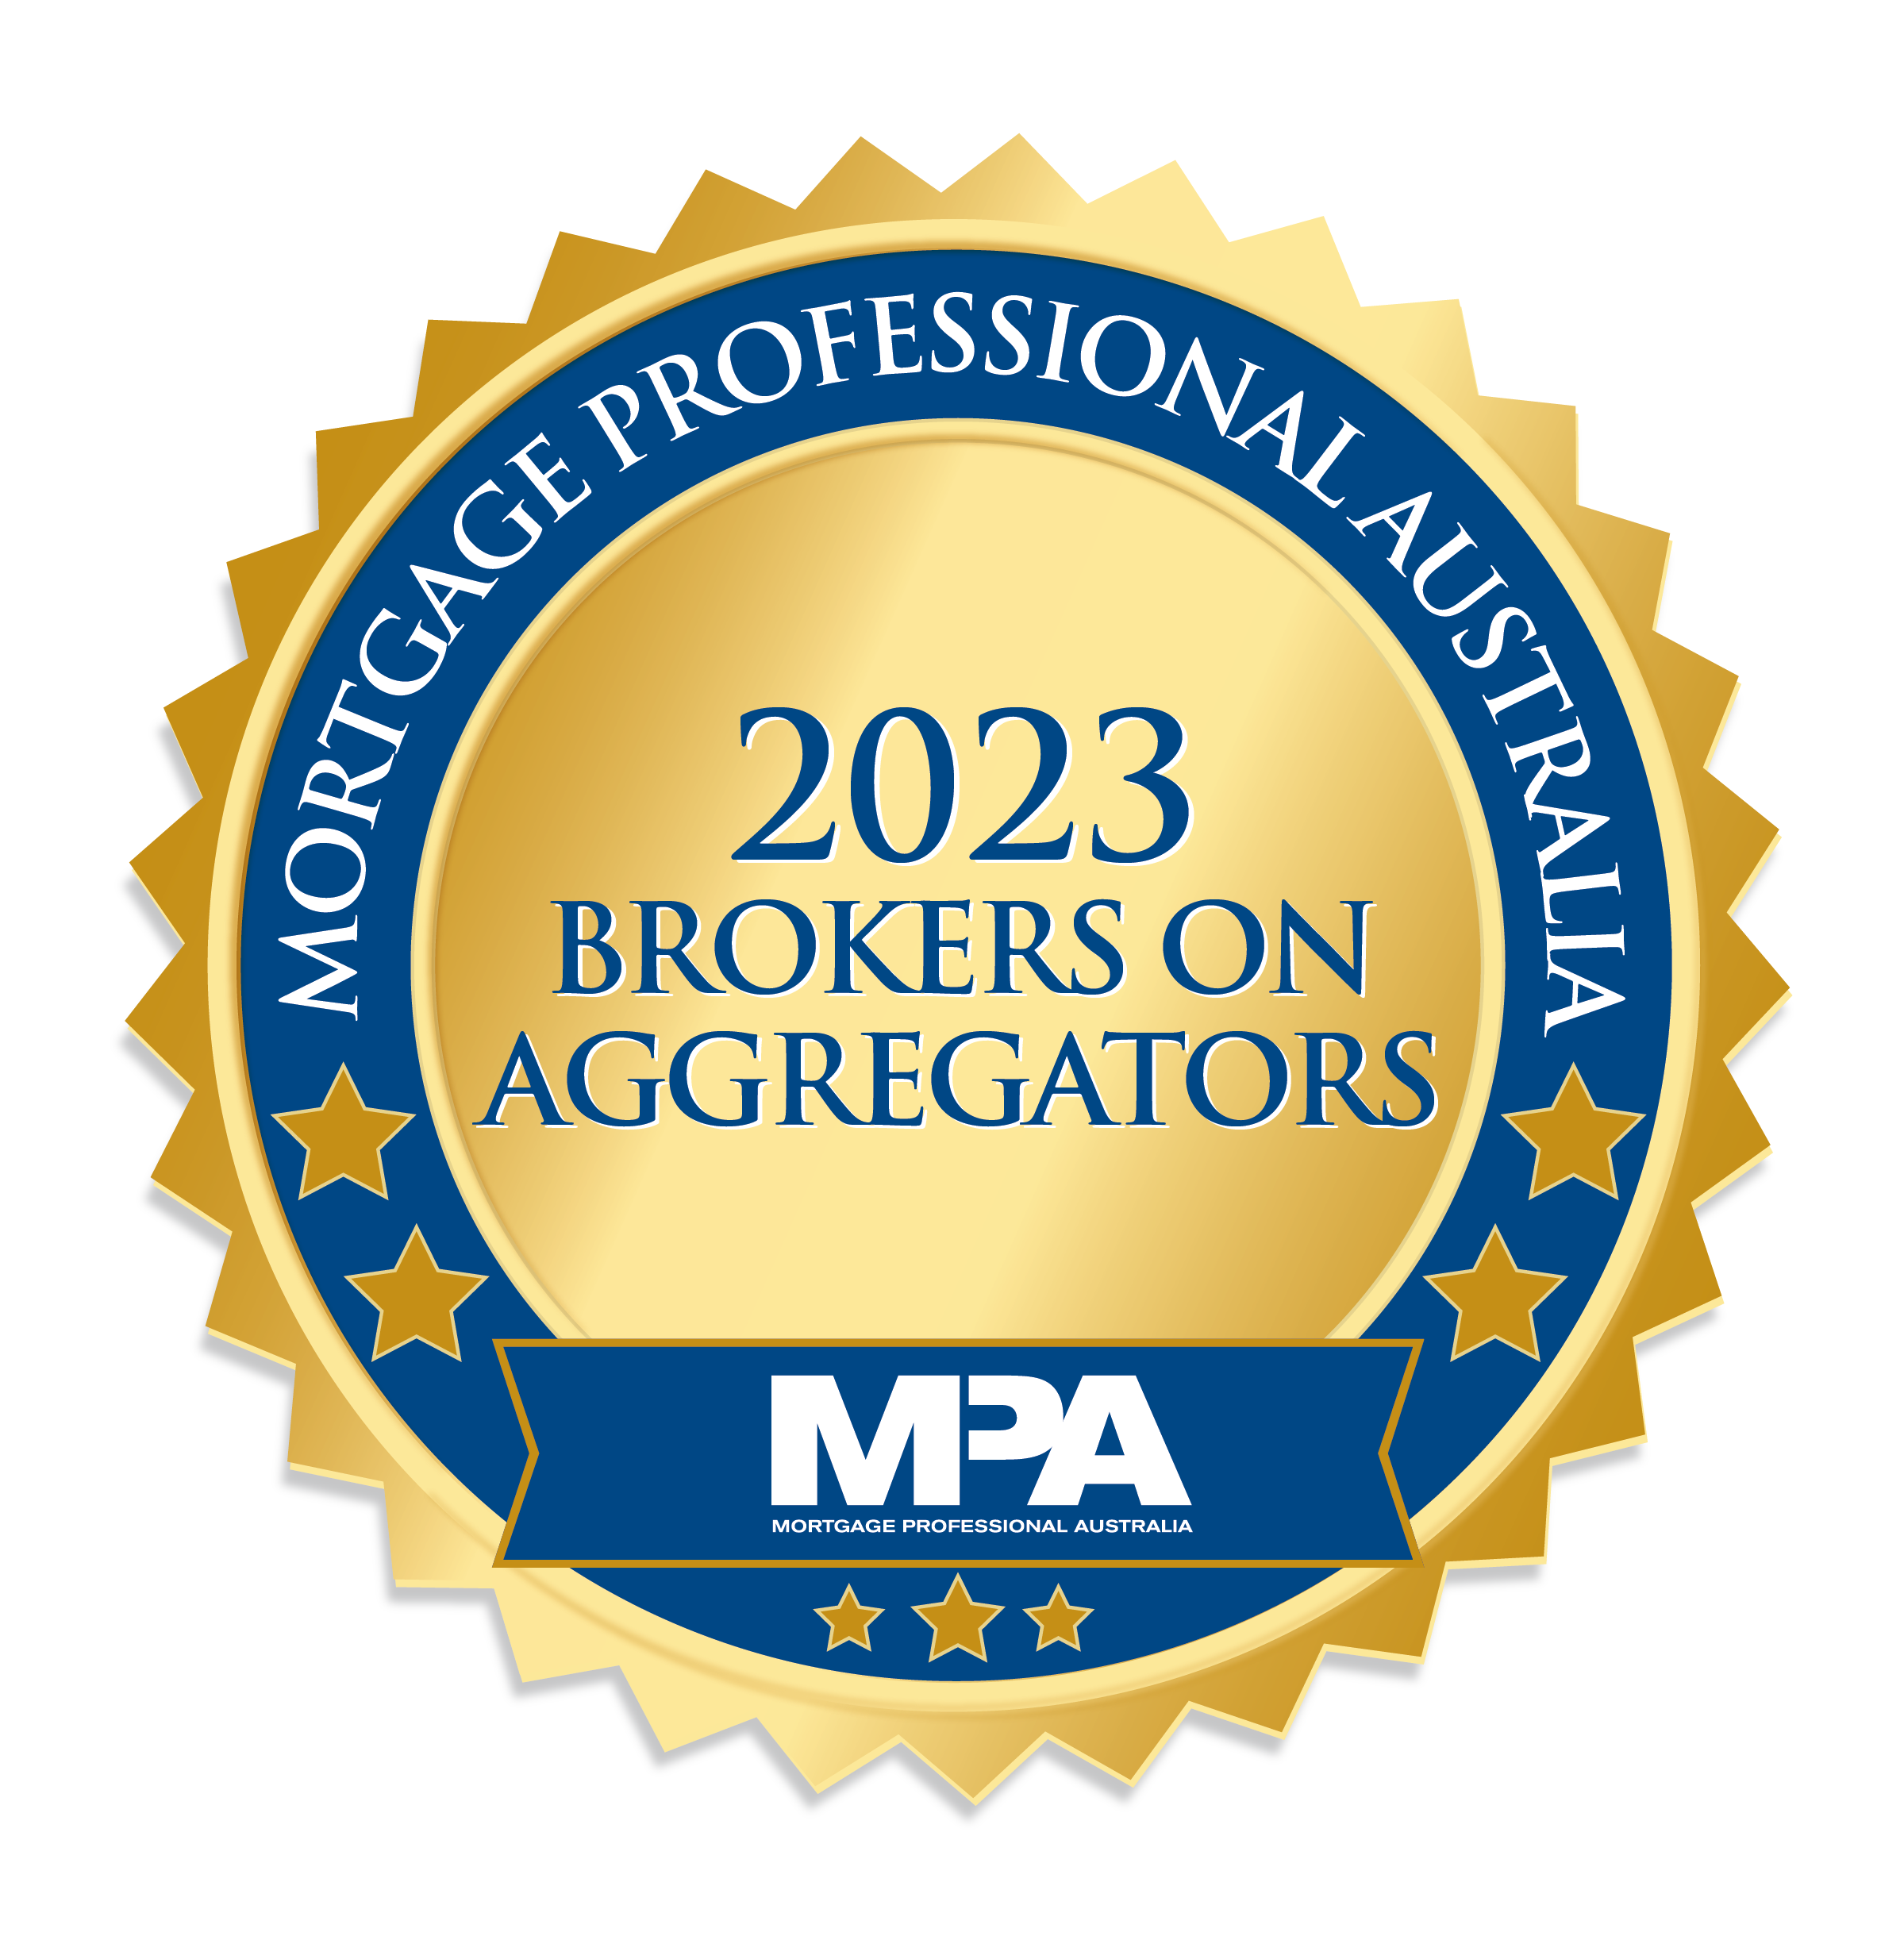 Brokers on Aggregators 2023